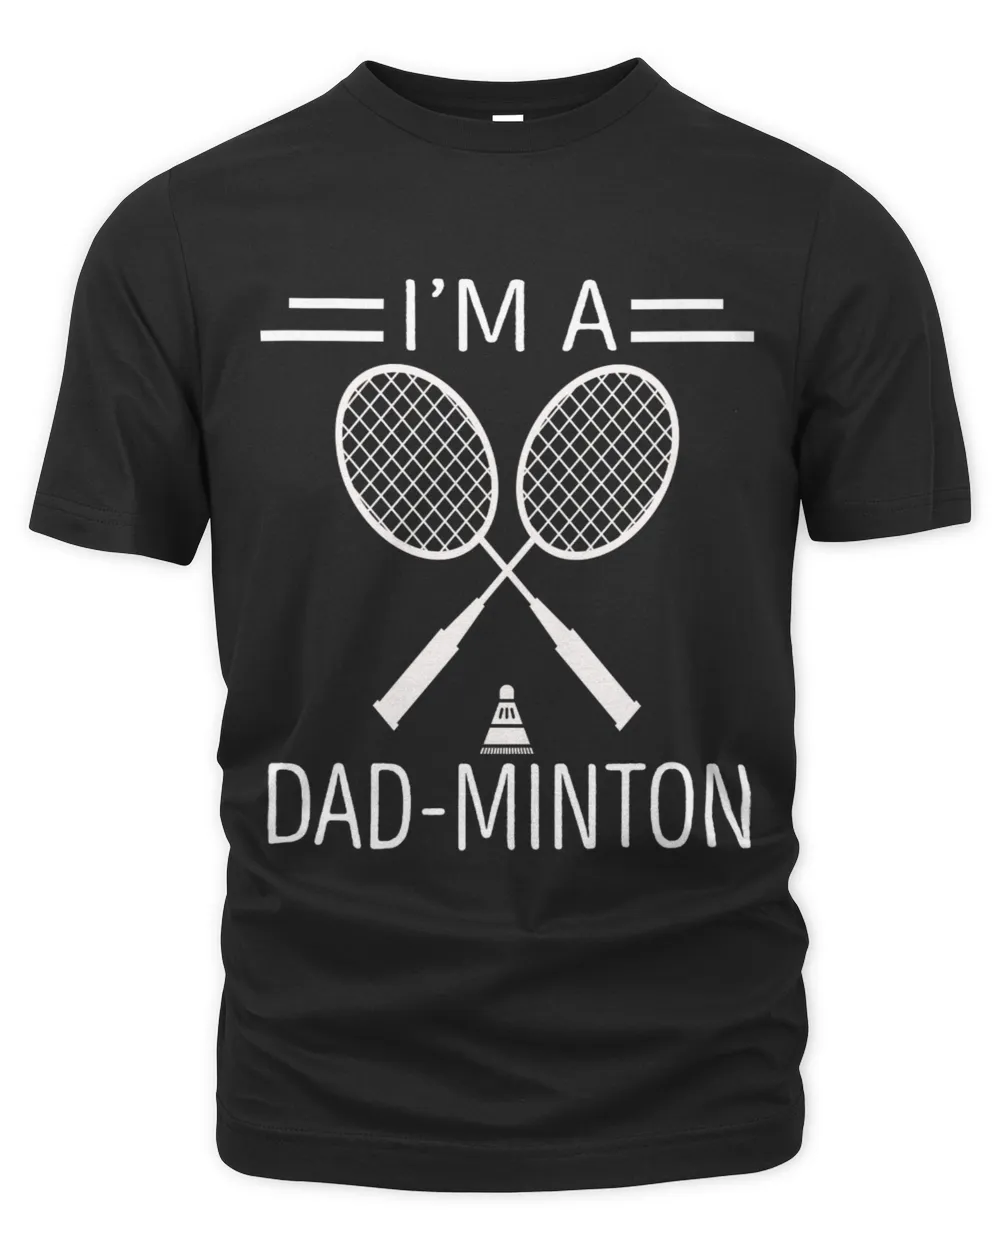 Funny Badminton Puns Badminton Jokes I'm A Dad-minton Badminton Players gift